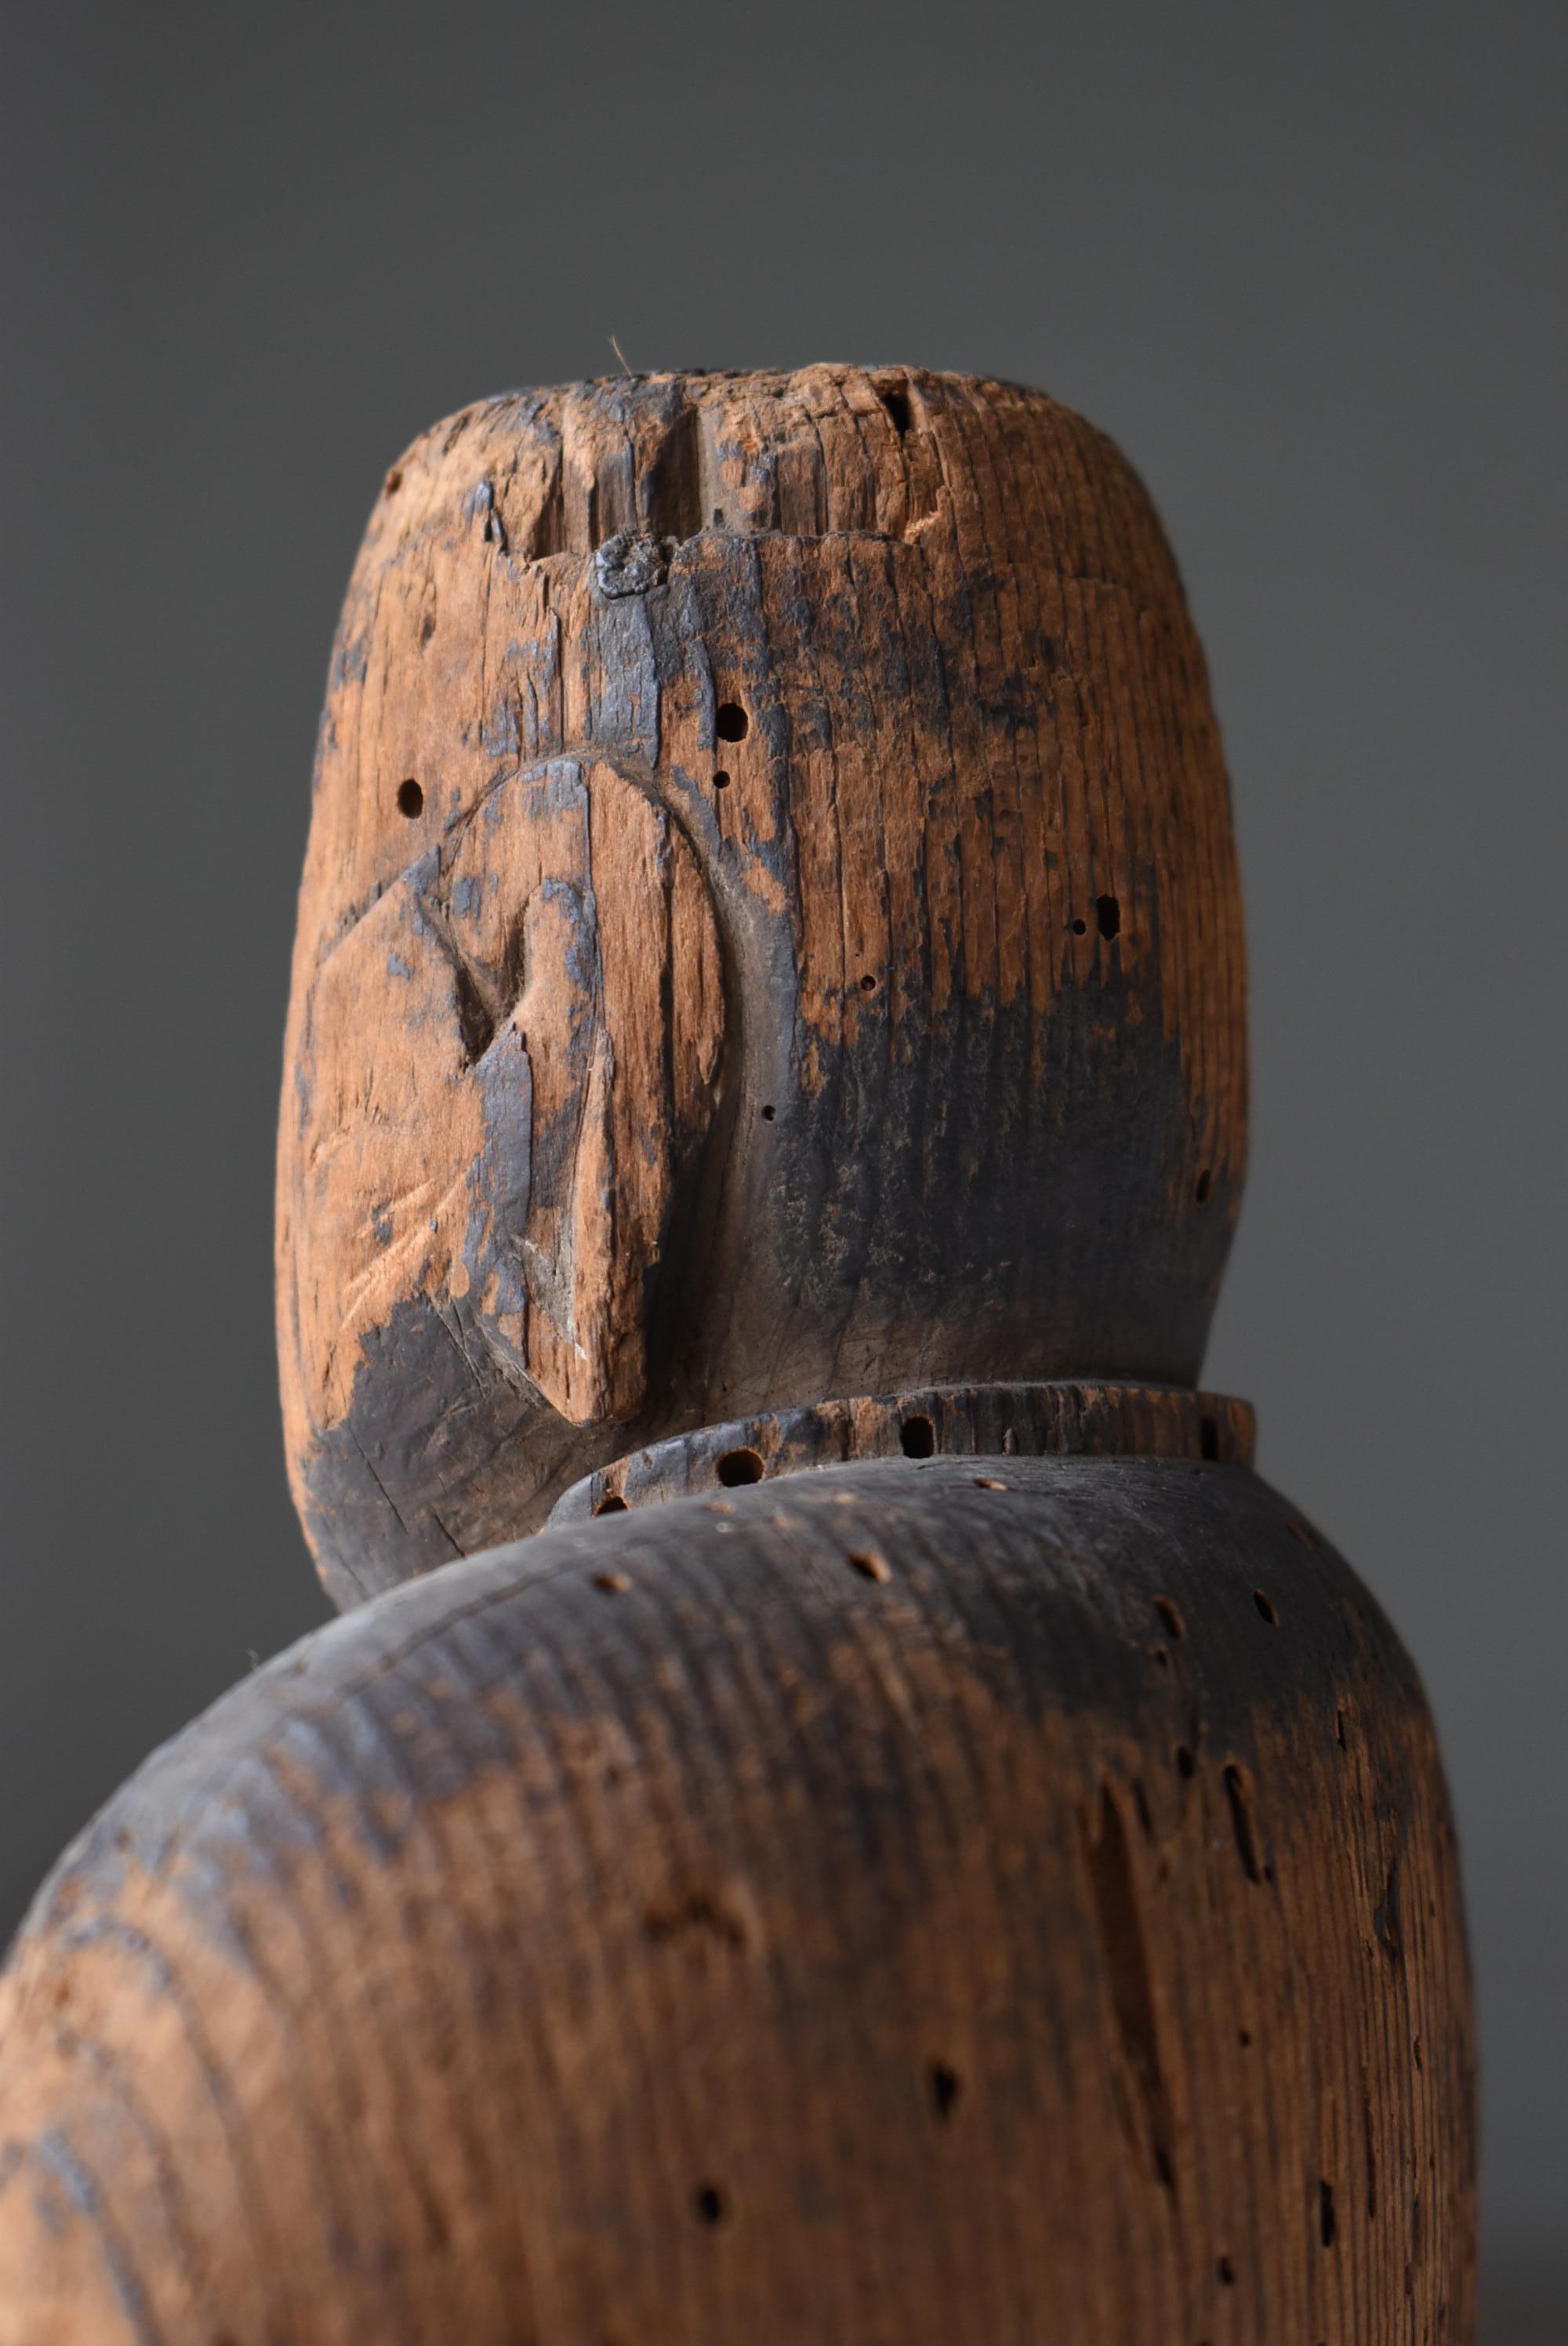 Japanese Antique Wood Carving God 1700s-1800s / Figurine Buddha Object Wabi Sabi 4